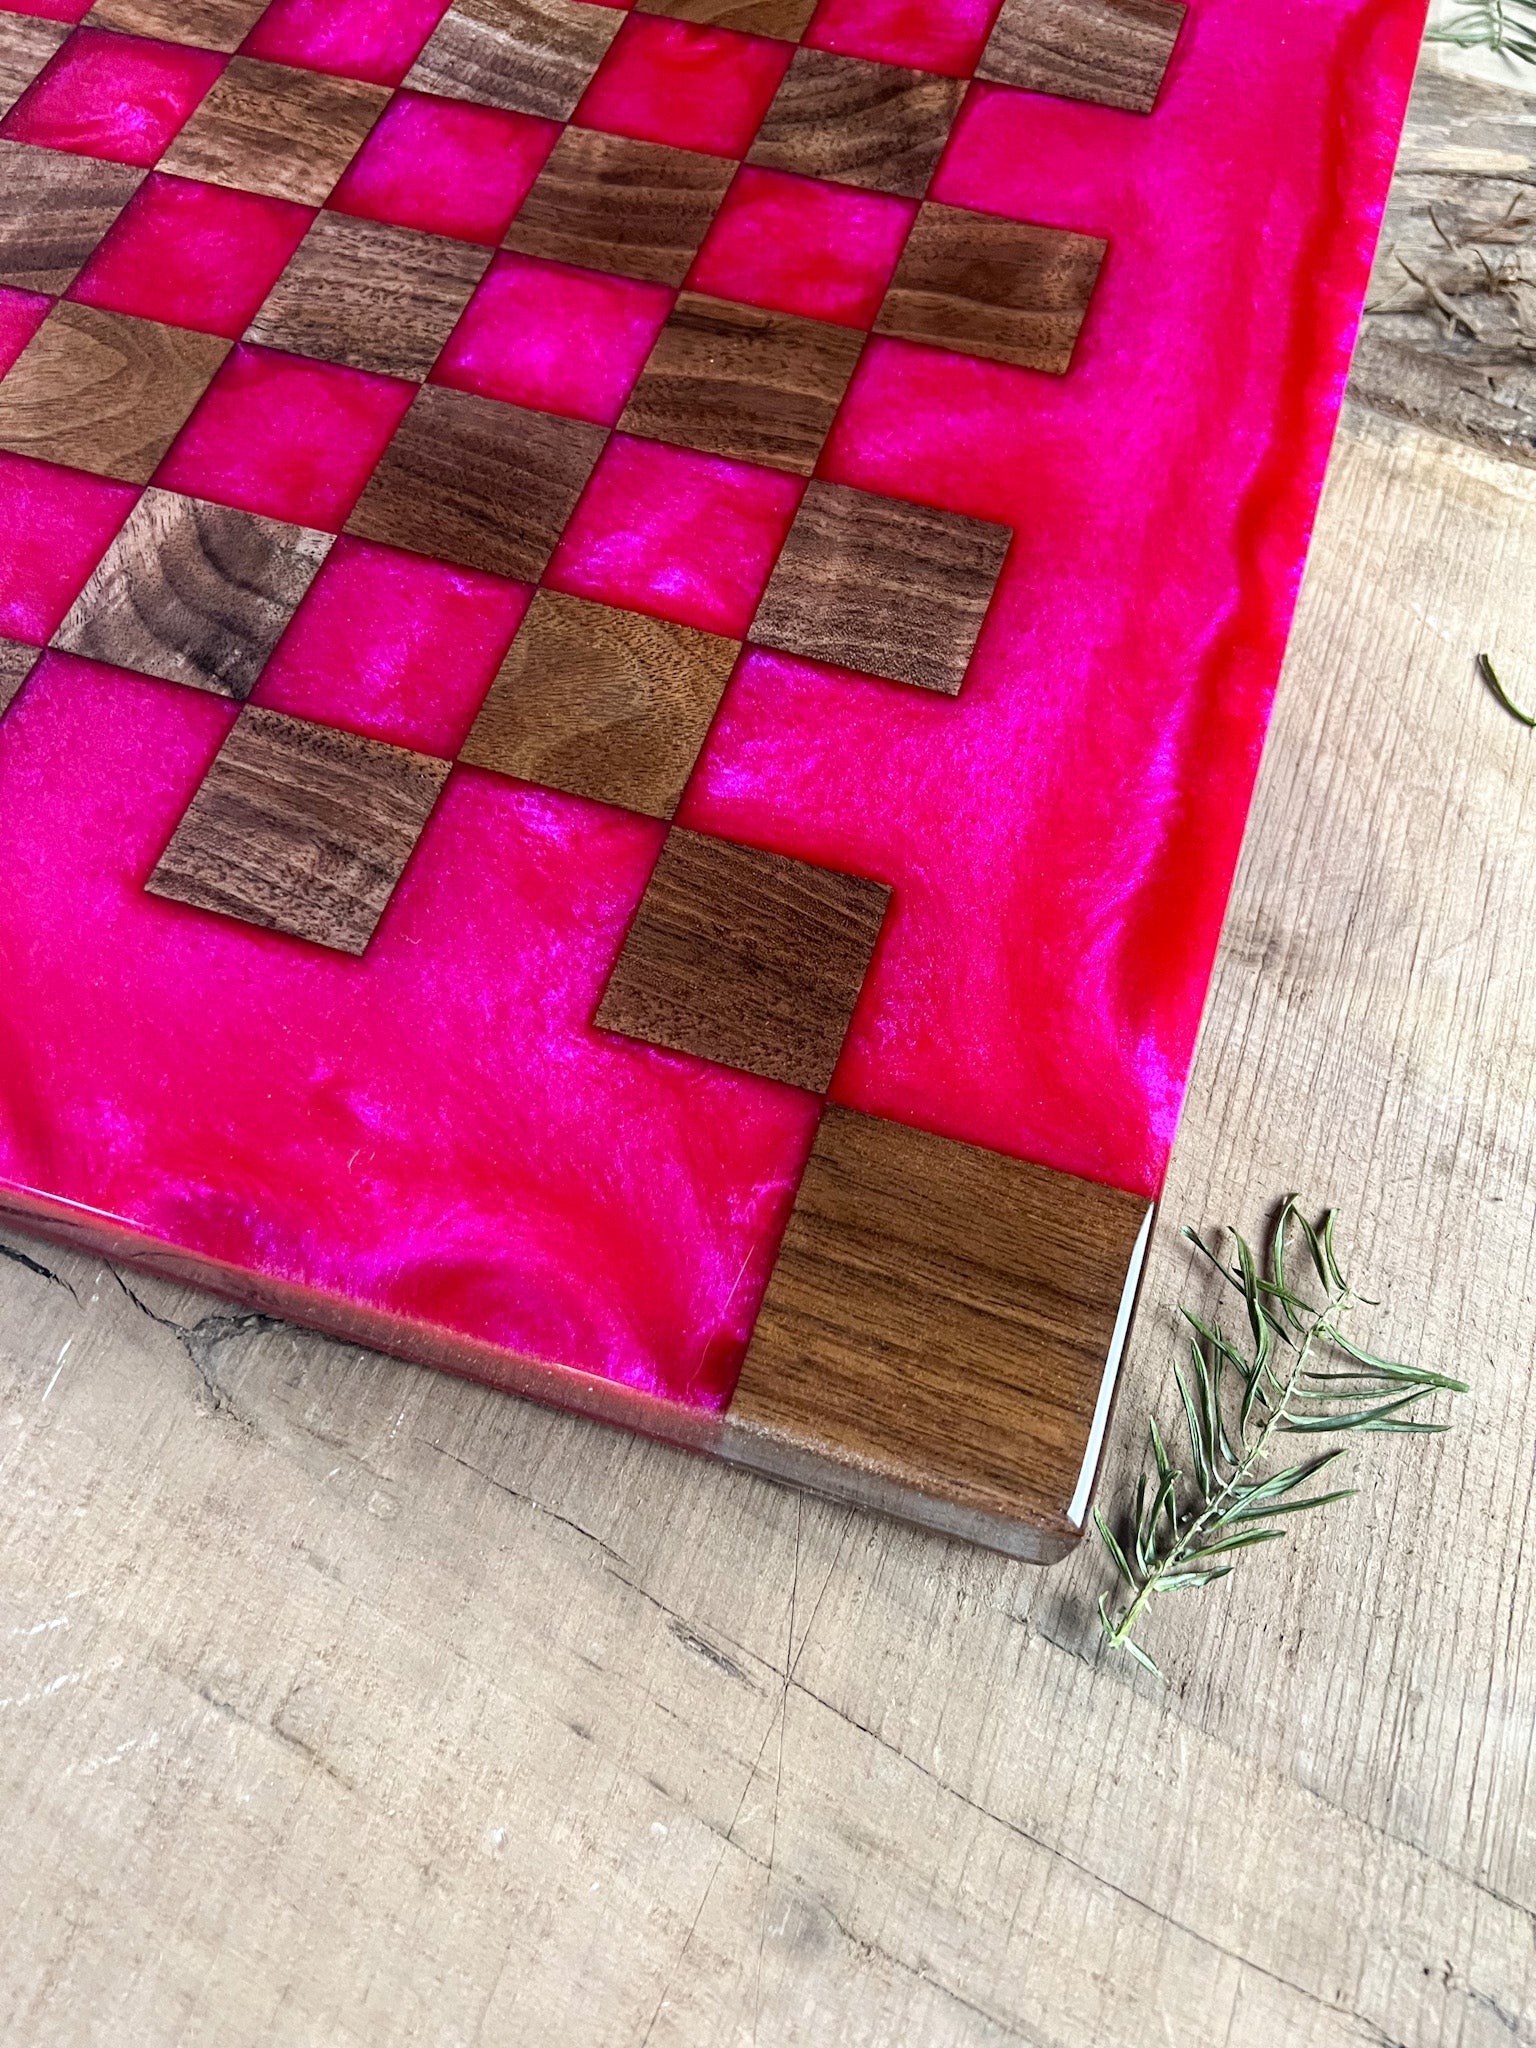 Raging Pink Walnut Chess Board